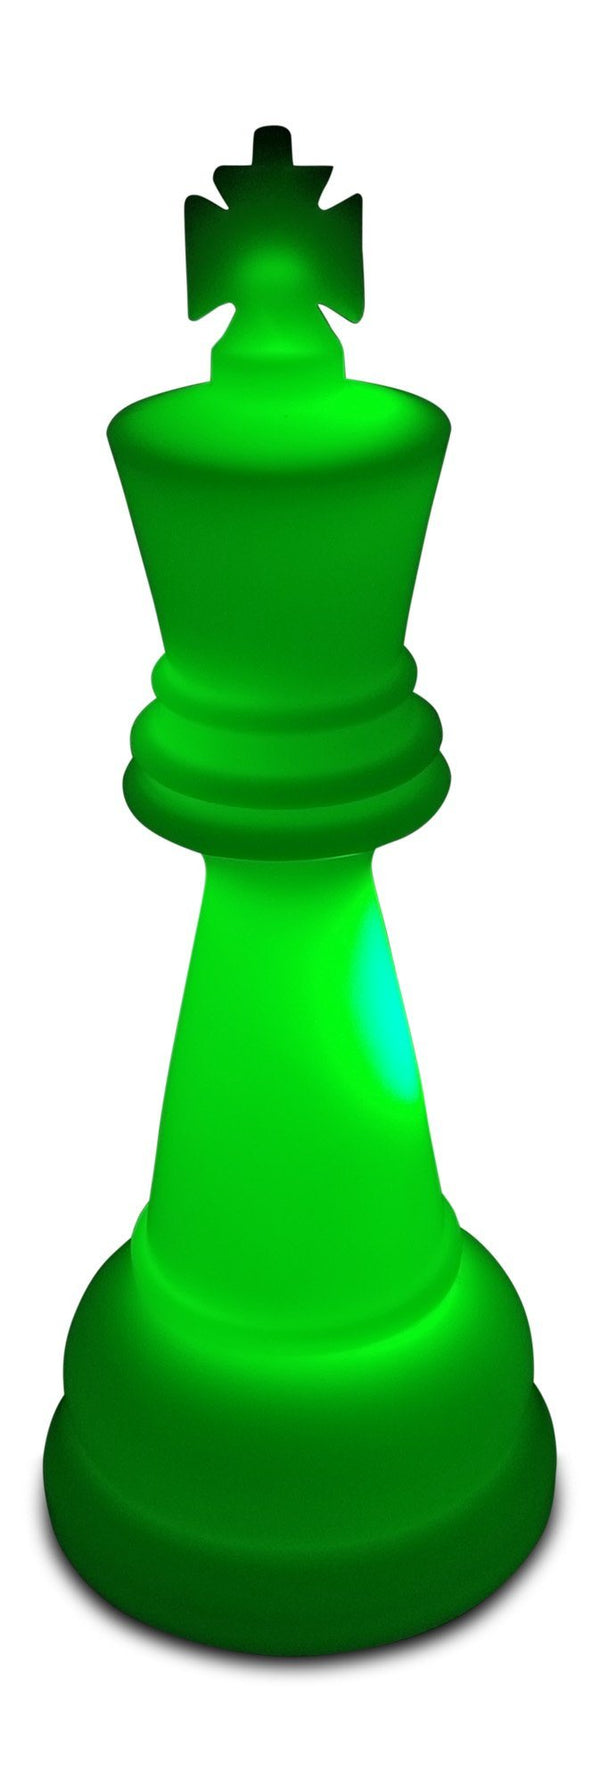 MegaChess 26 Inch Perfect King Light-Up Giant Chess Piece - Green |  | MegaChess.com